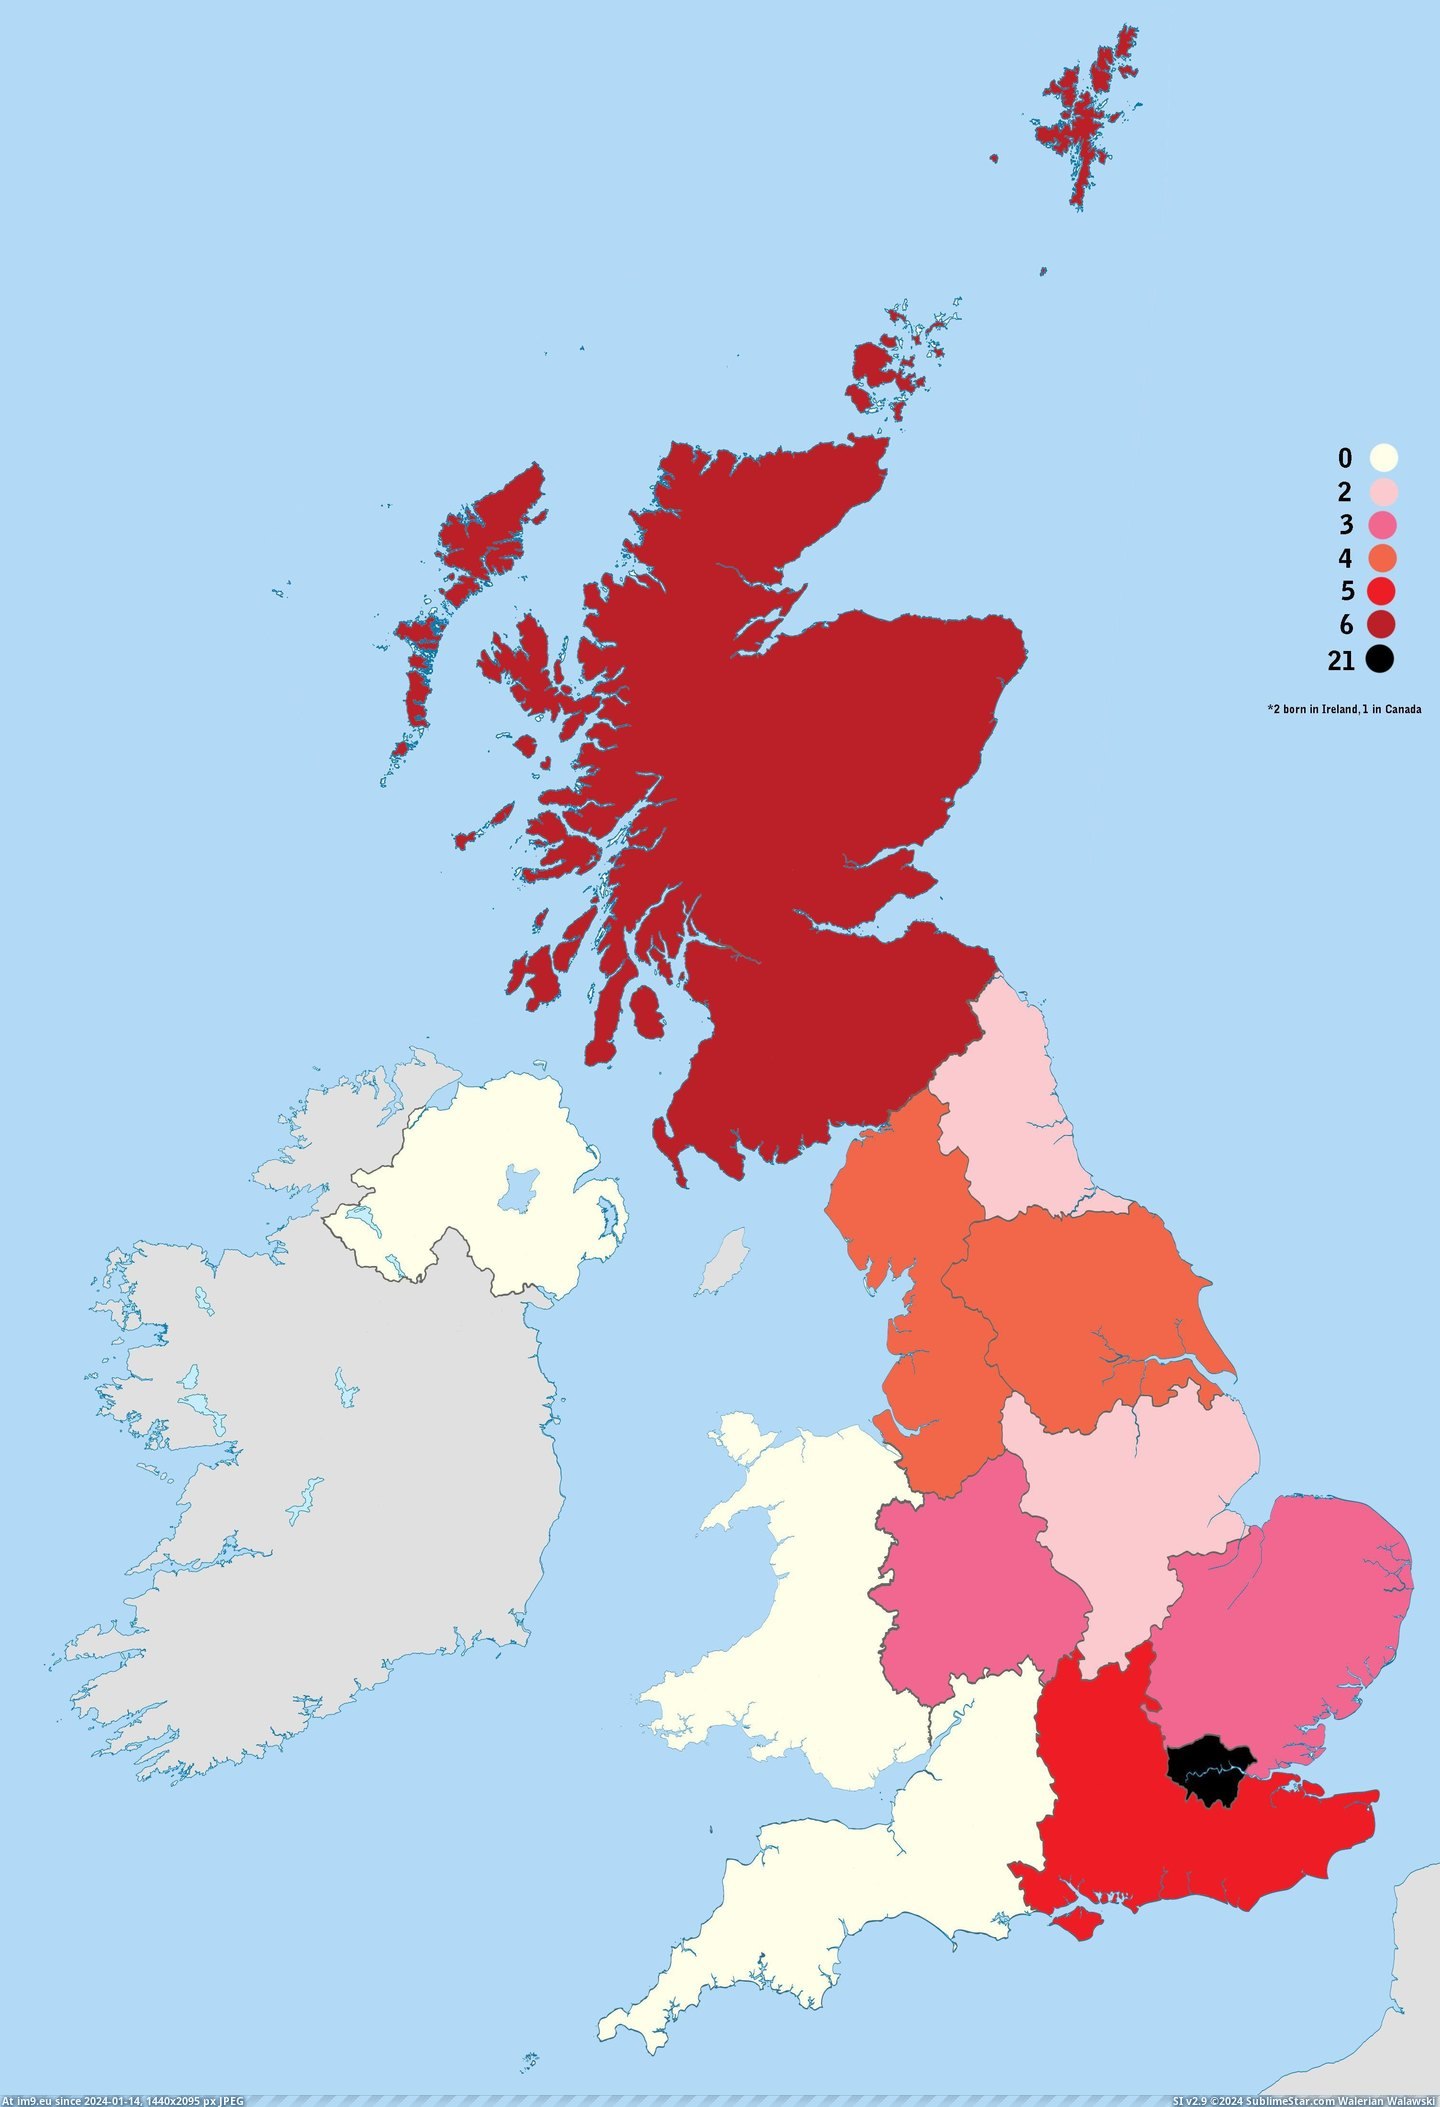 #British #Number #Regions #Ministers #Born #Prime [Mapporn] UK regions by number of British Prime Ministers born in each [3011x4392] [OC] Pic. (Obraz z album My r/MAPS favs))